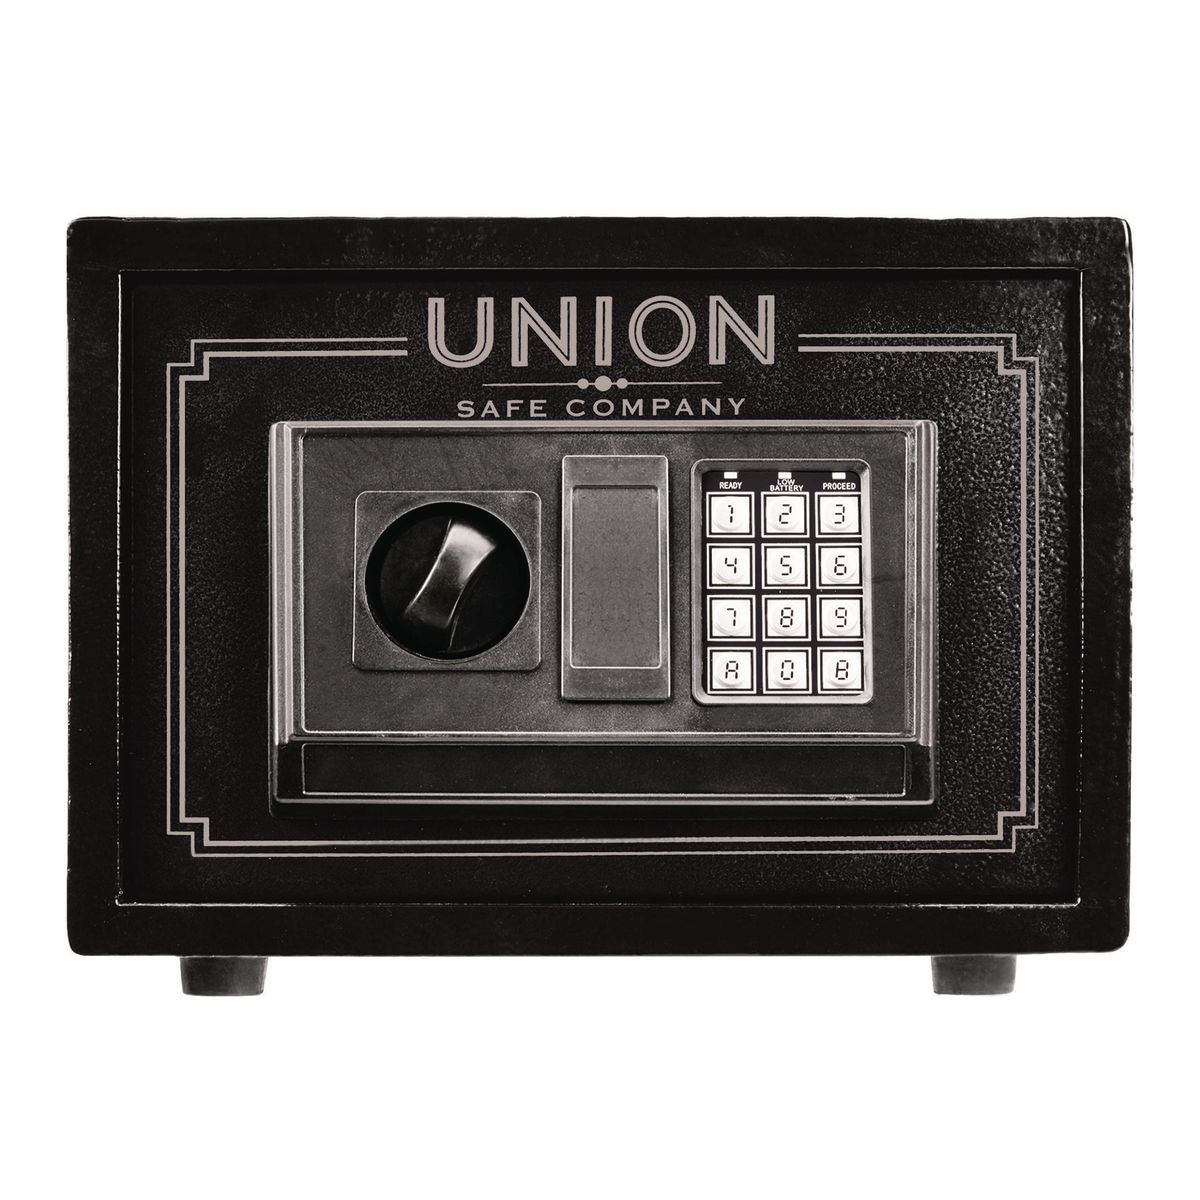 UNION SAFE COMPANY 0.71 cu. ft. Electronic Digital Safe - Item 62978 / 45891 / 61724 / 62679